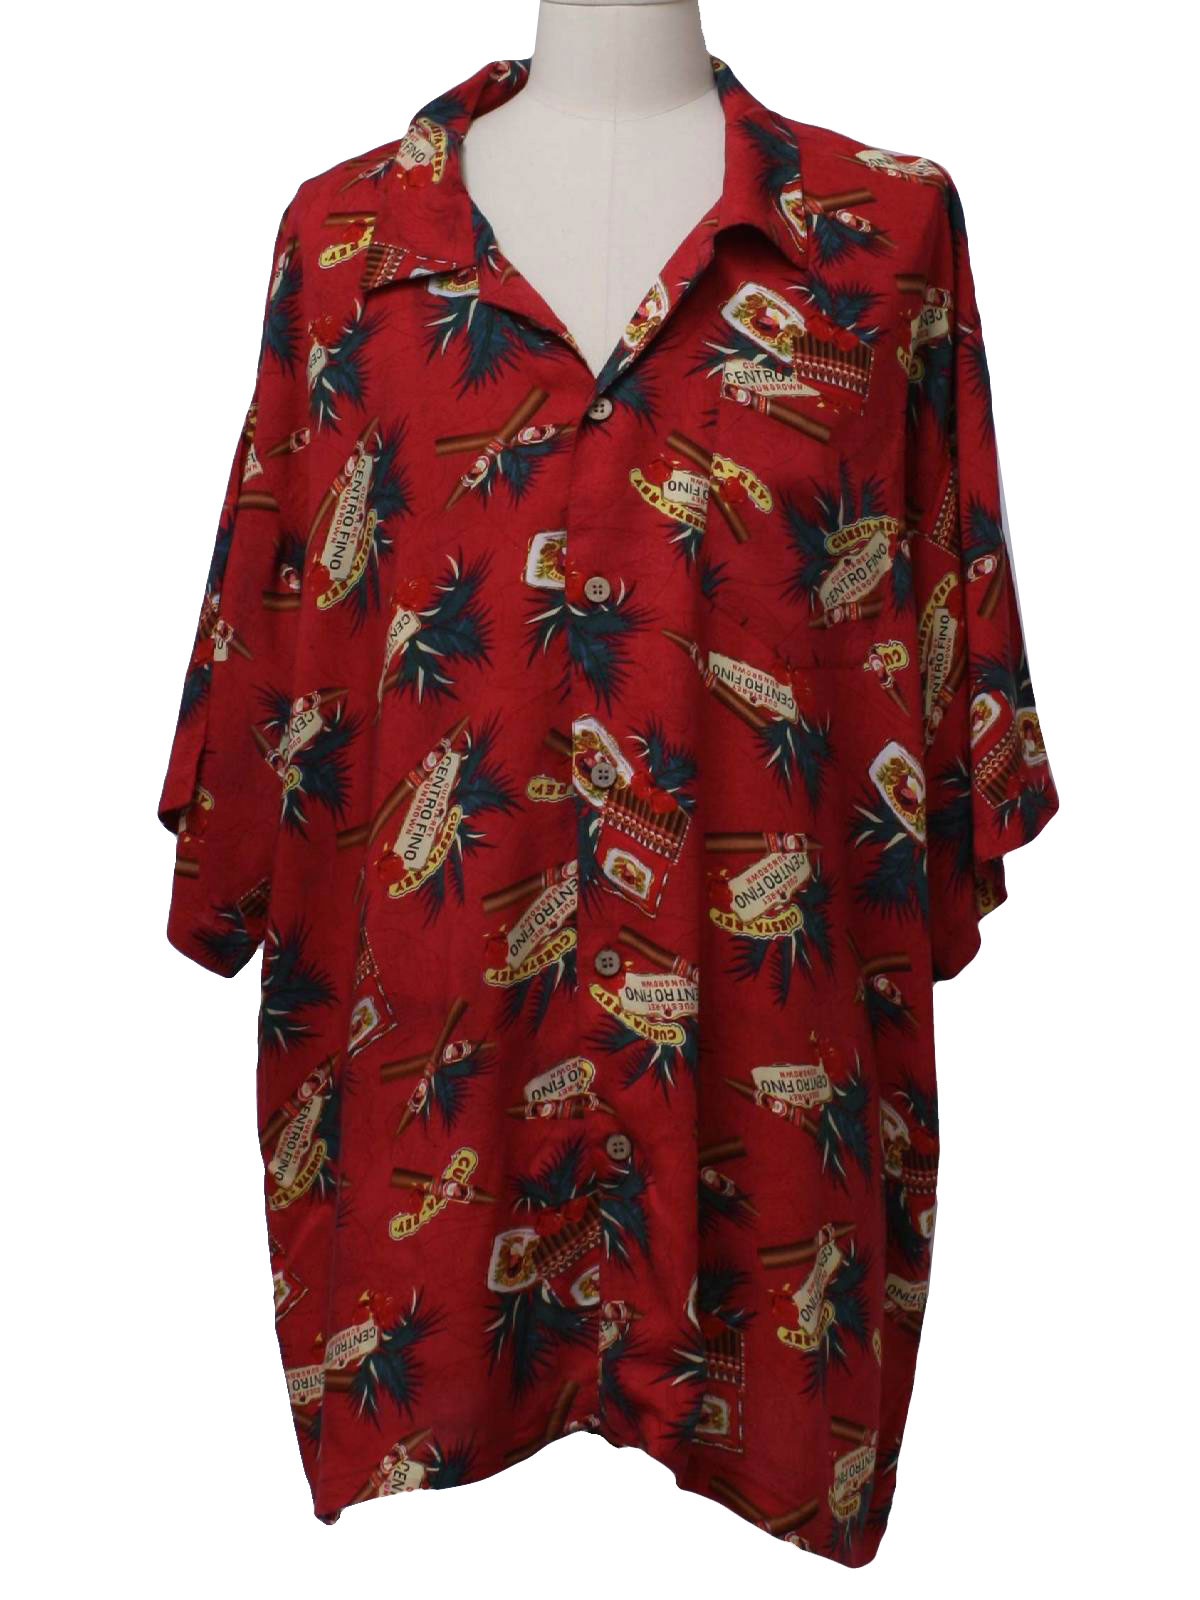 Retro Nineties Hawaiian Shirt: 90s -J.C. Newman Cigar Co.- Mens red ...